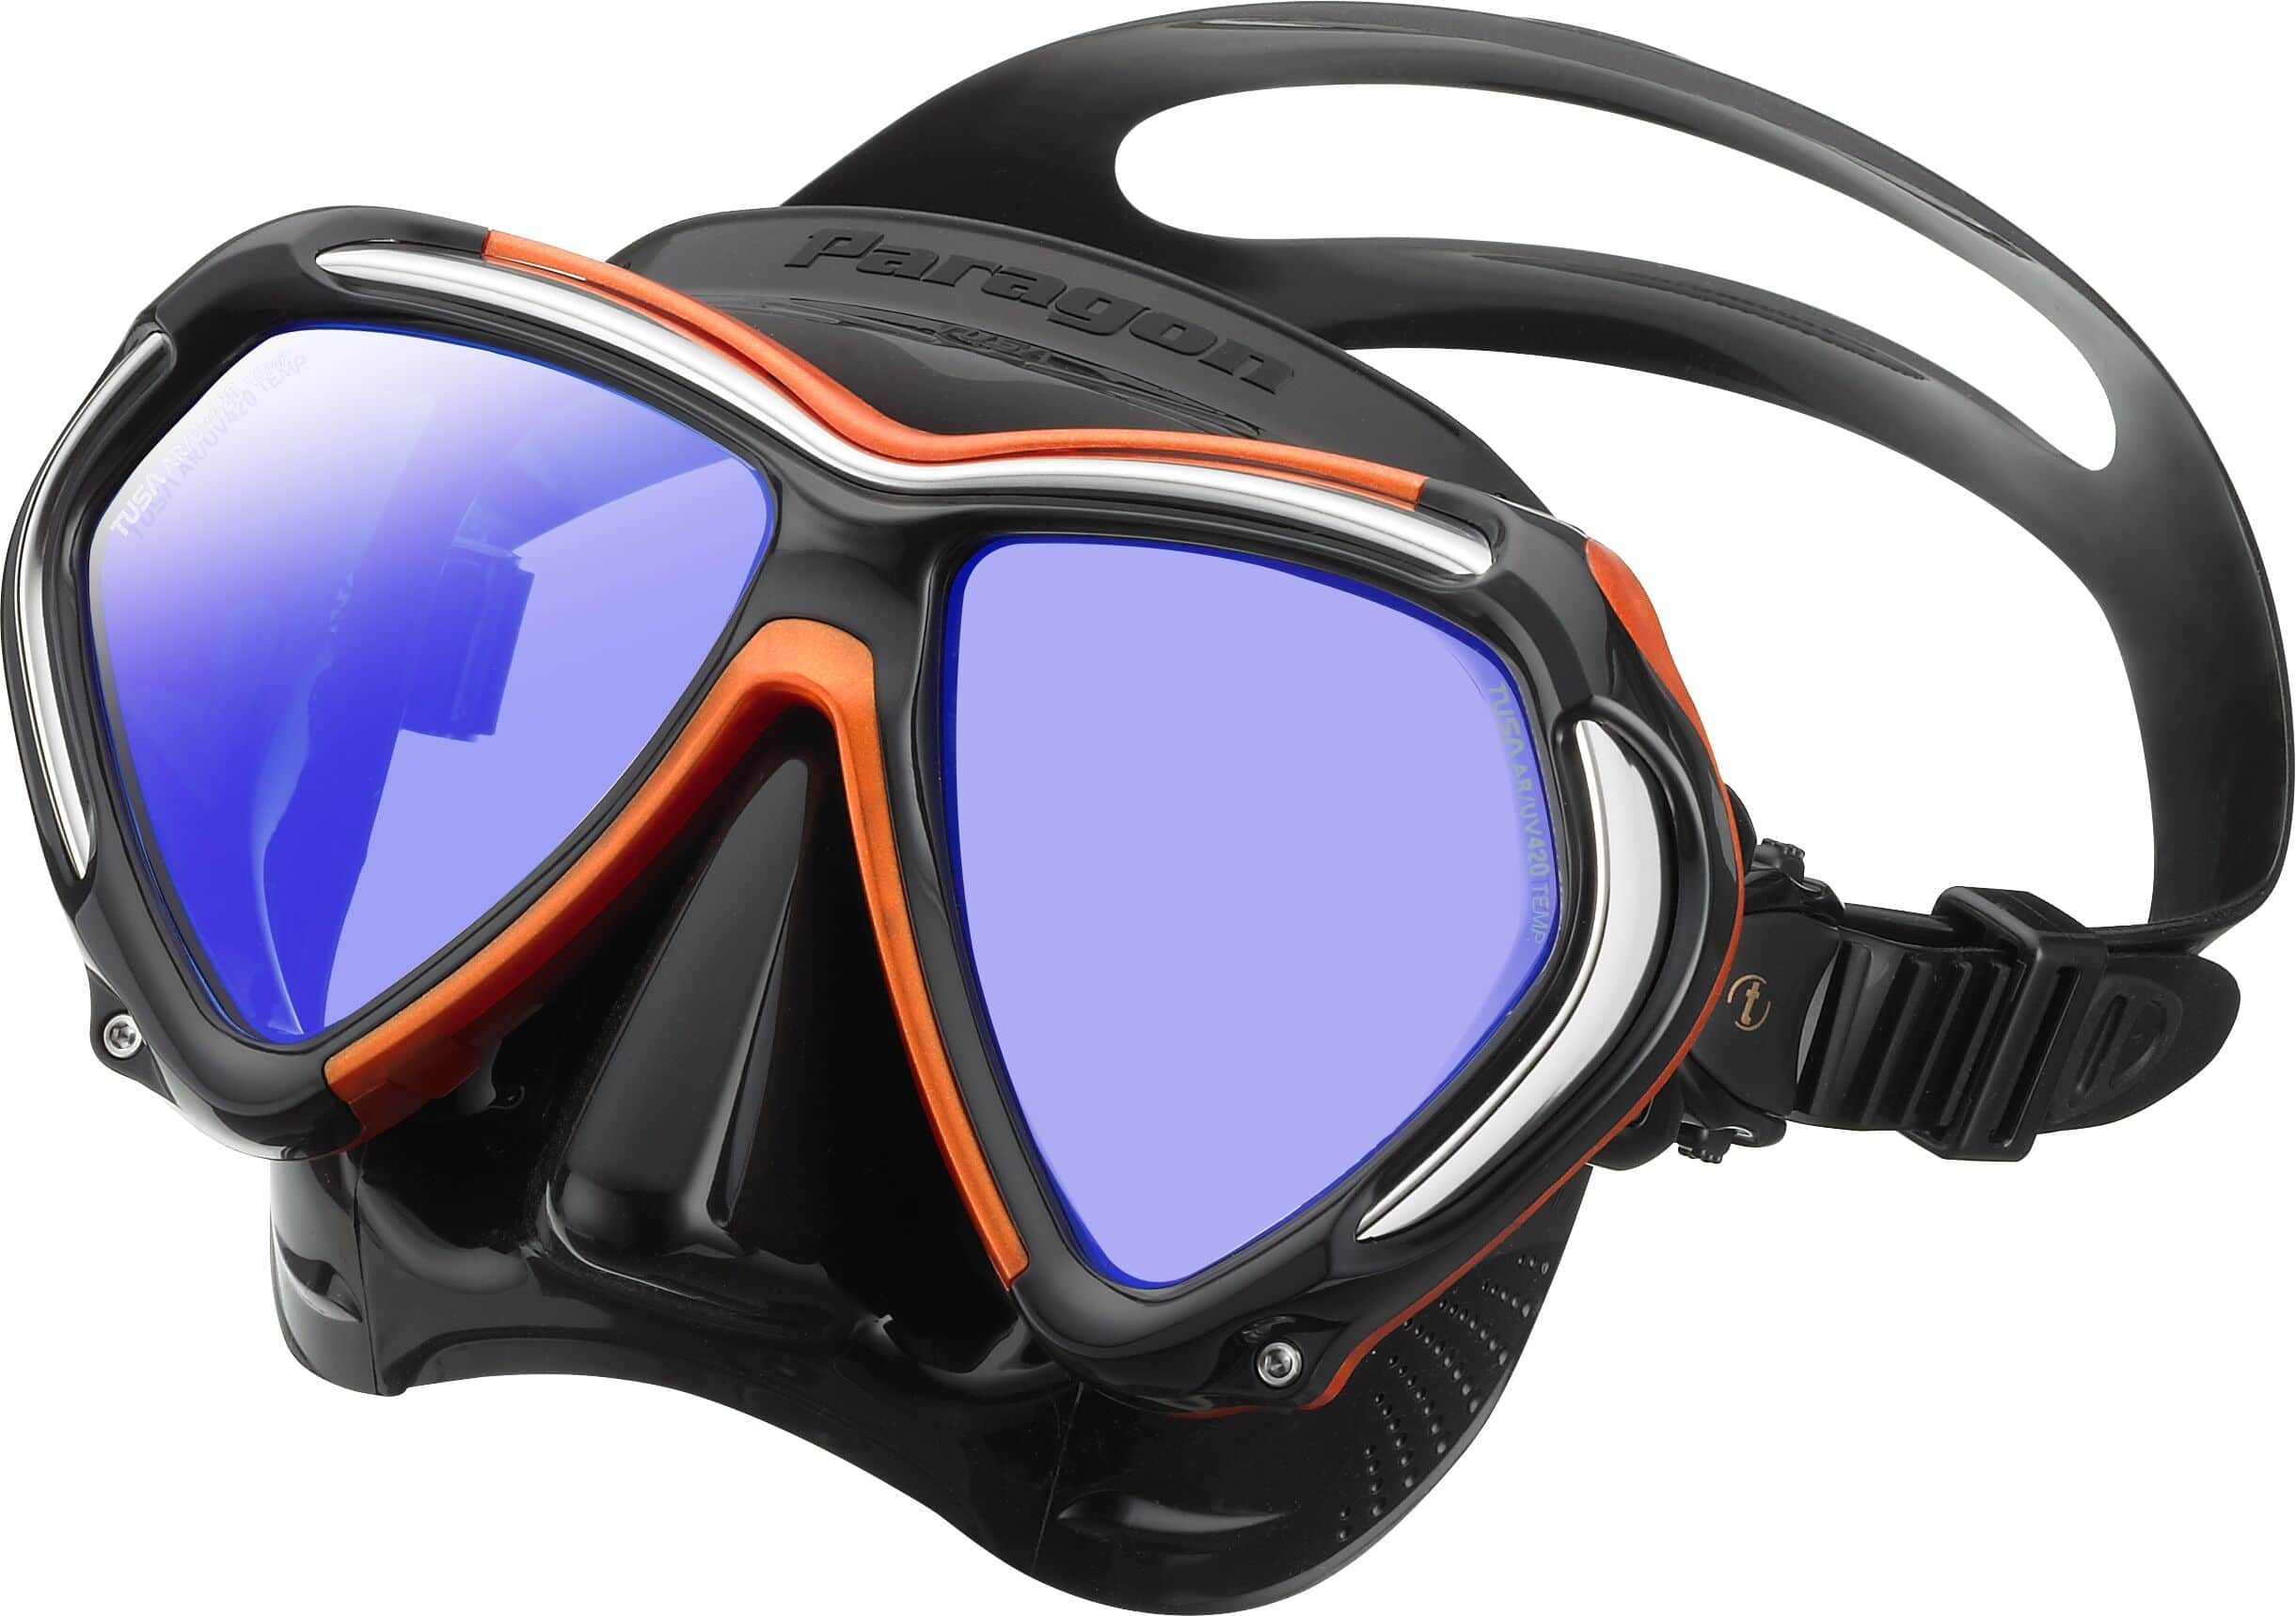 TUSA's Paragon M2001S series dive mask